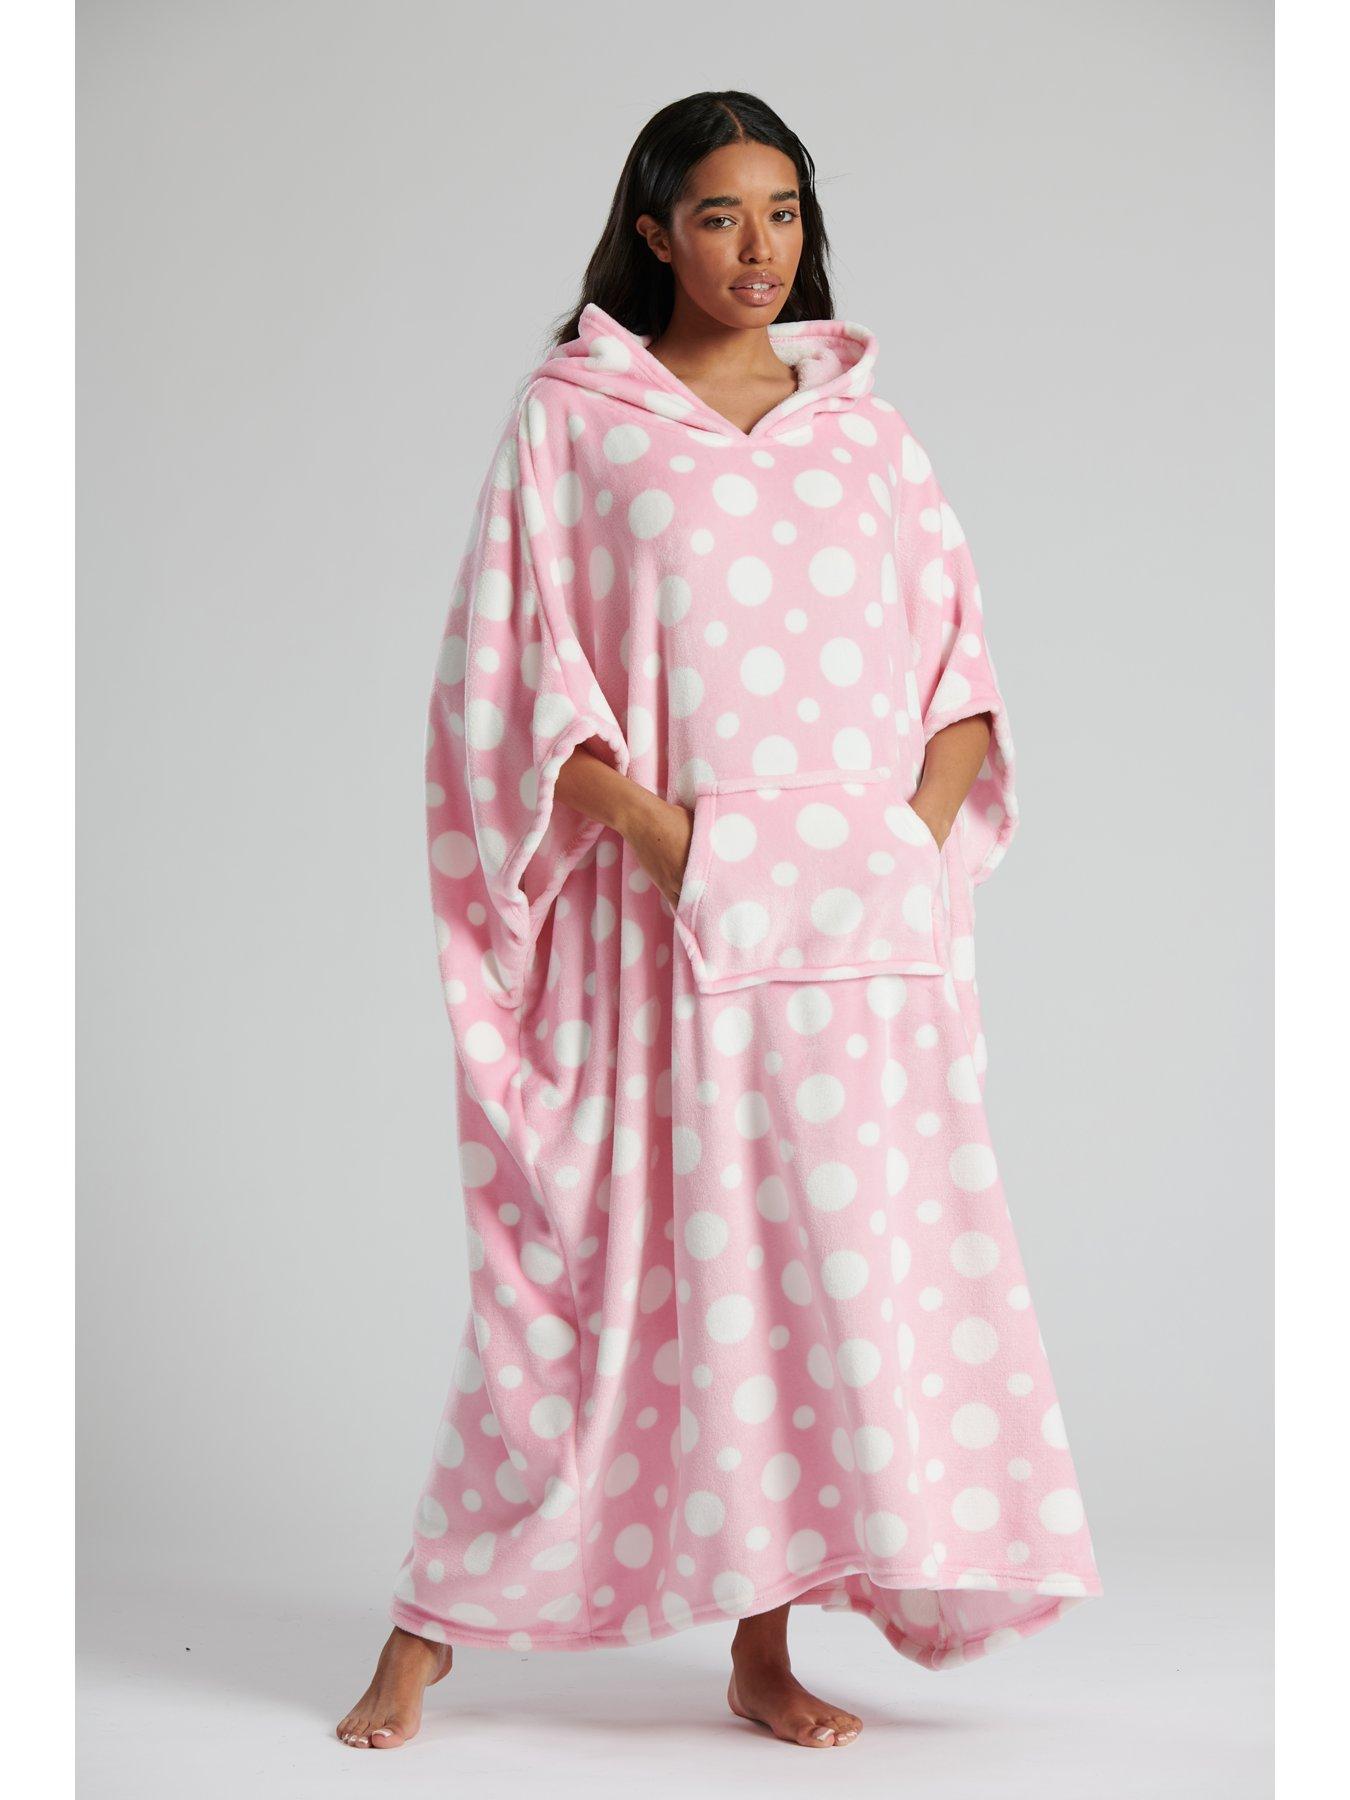 Camilla Silk Oversized Robe Rocket Womens Clothing Nightwear and sleepwear Robes robe dresses and bathrobes 